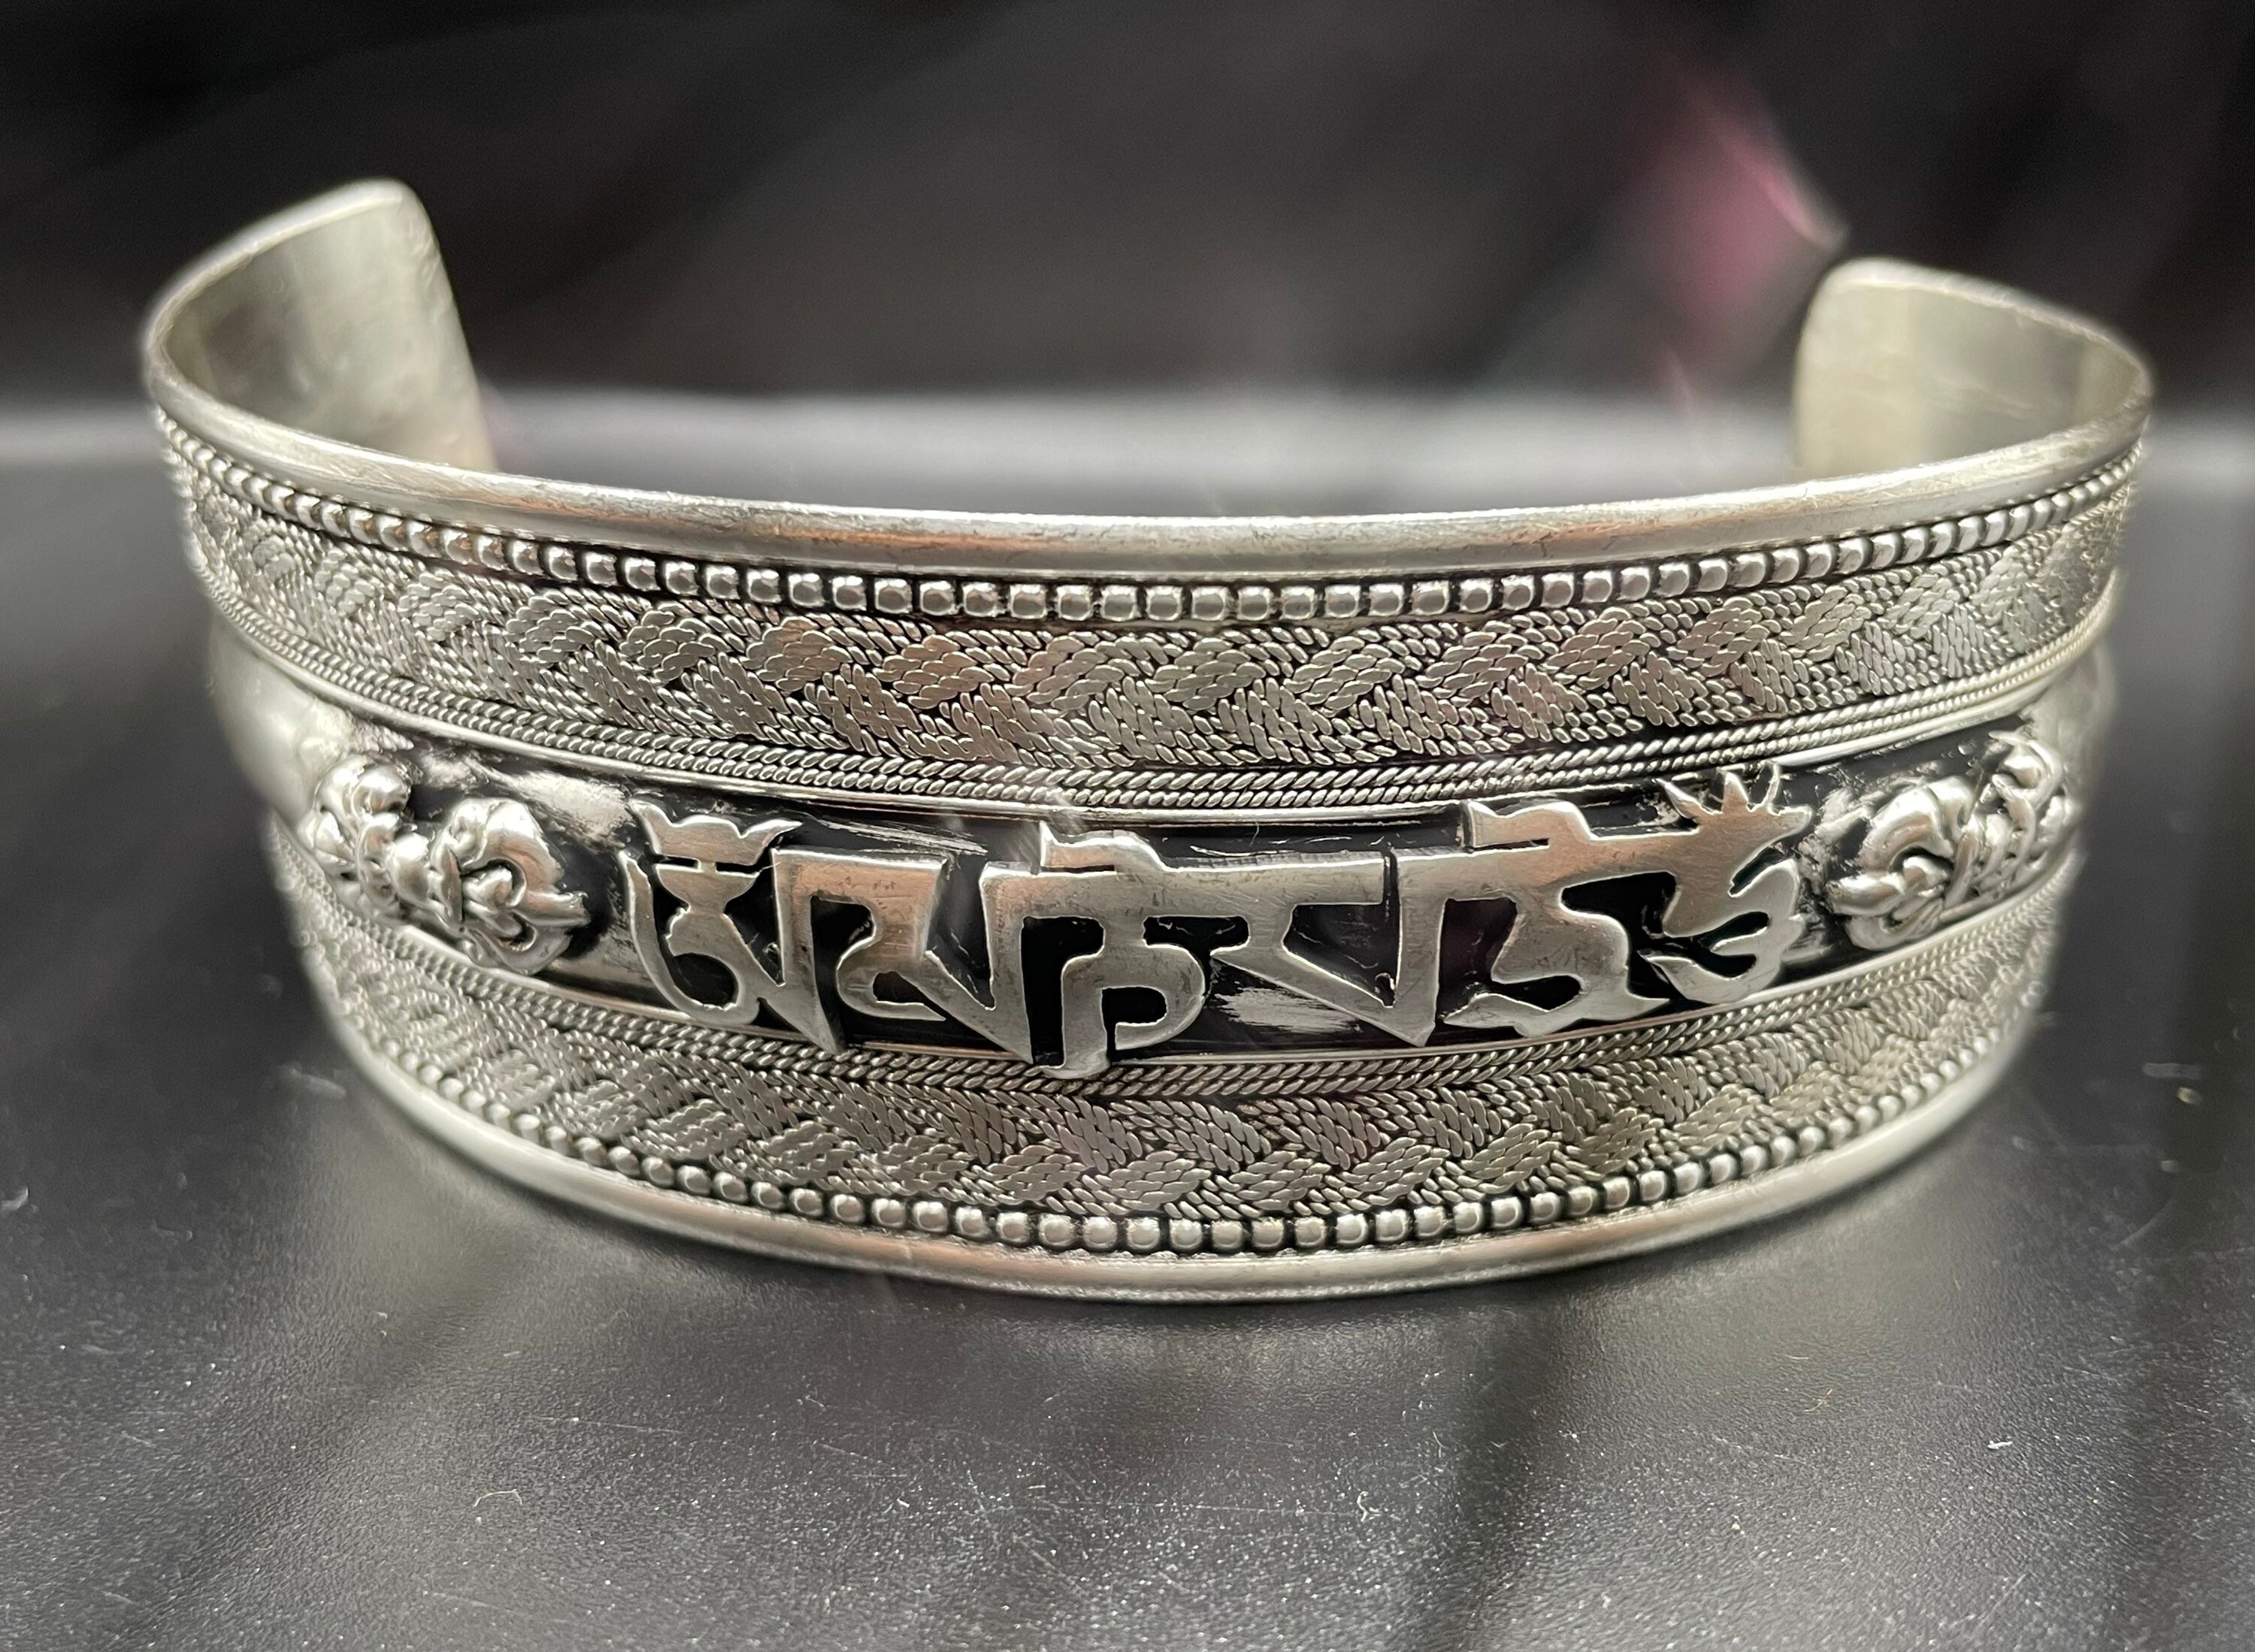 Handmade Unisex Silver Bracelet, Handcarved With om Mani Padme Hum Tibetan  Mantra, Adjustable Size, Handmade in Nepal - Etsy